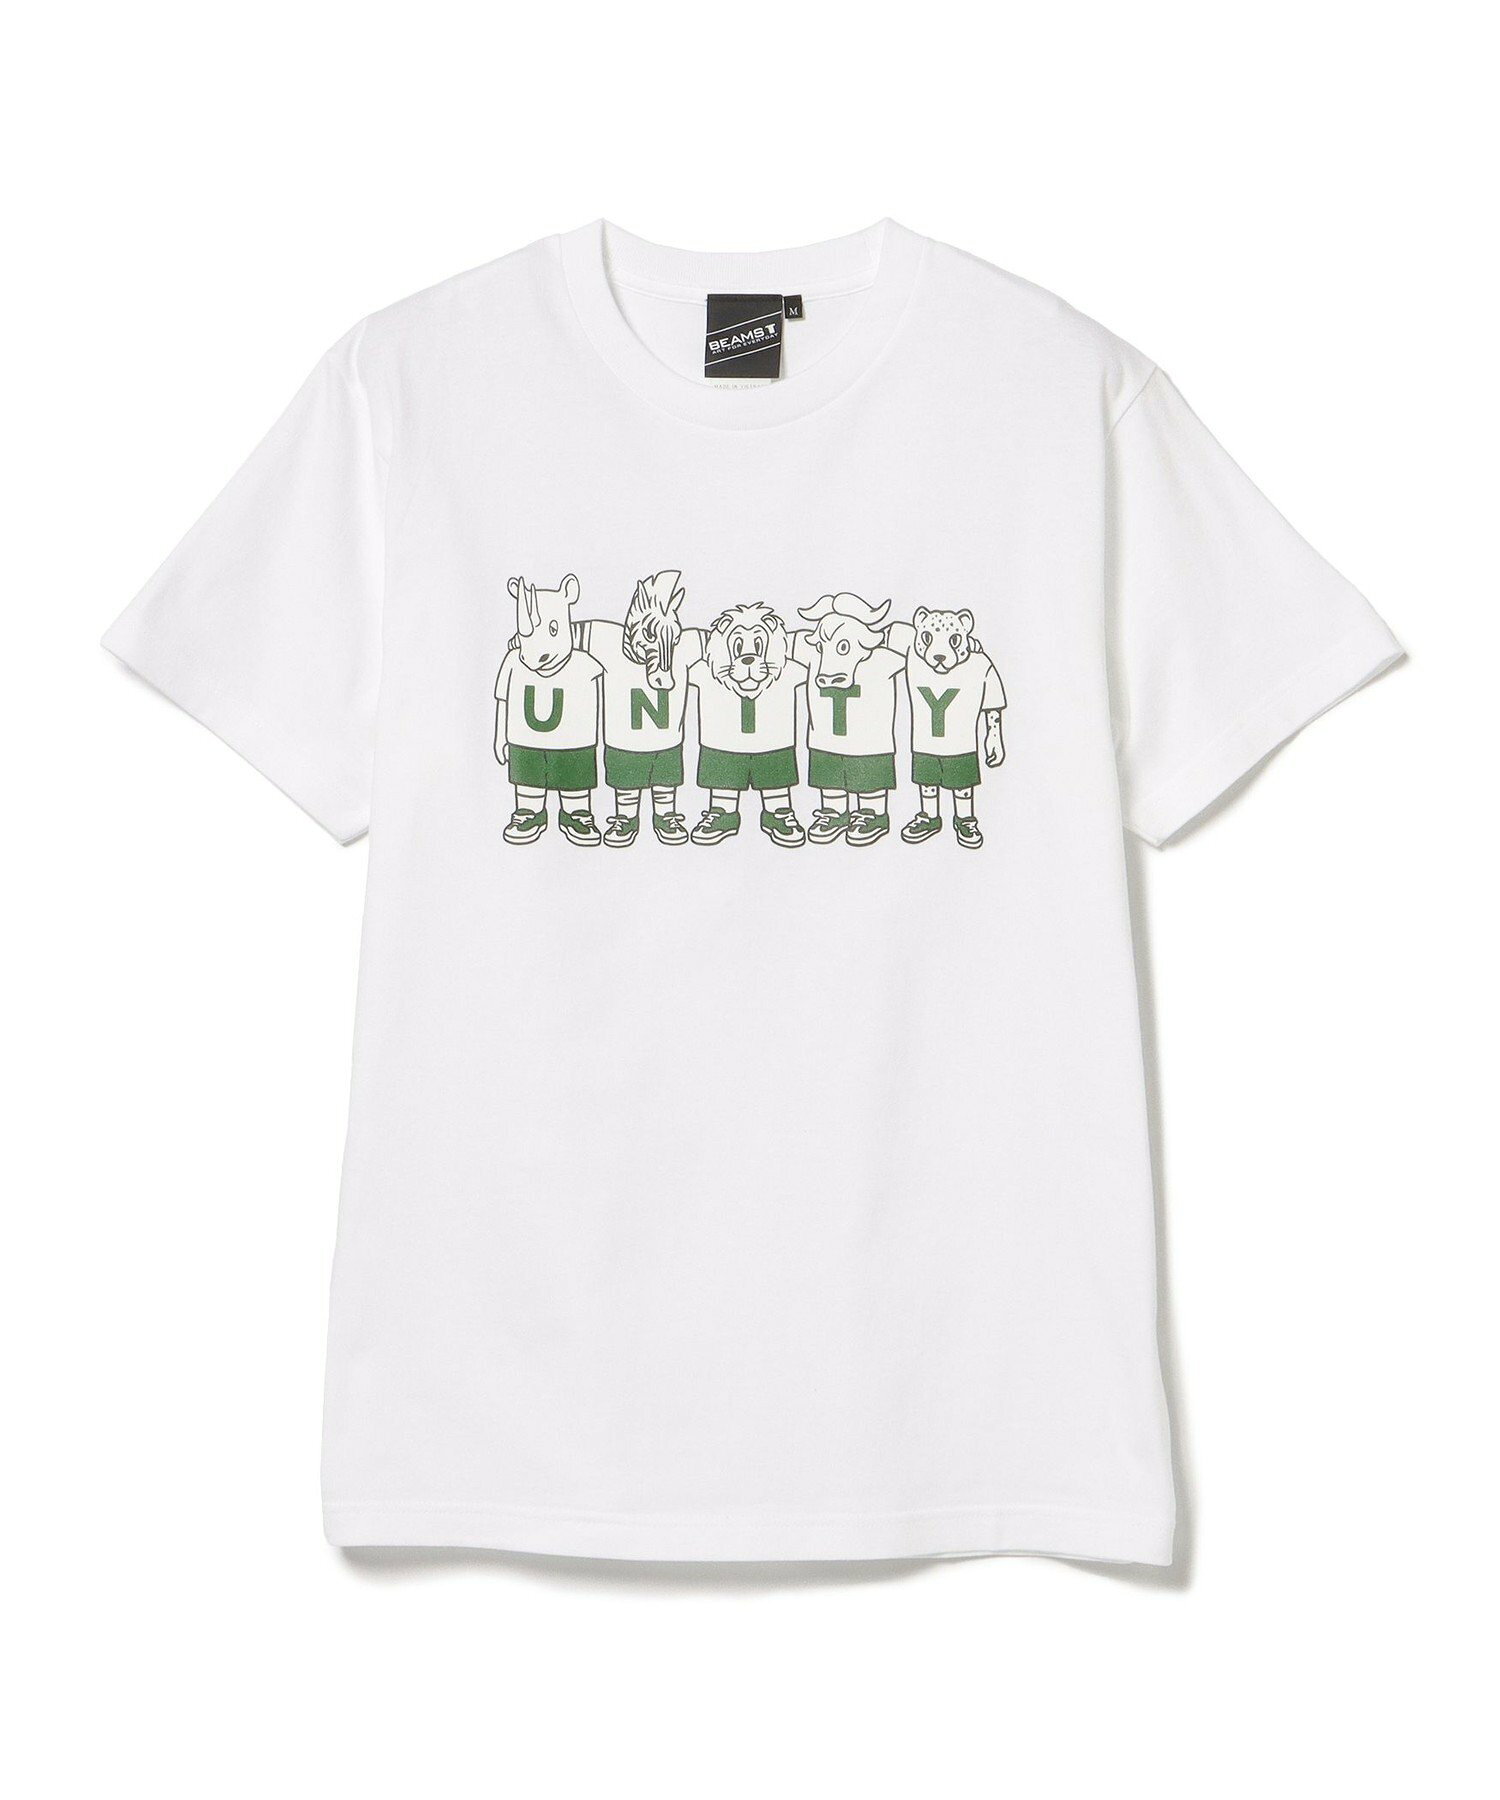 【SPECIAL PRICE】BEAMS T / UNITY Tシャツ